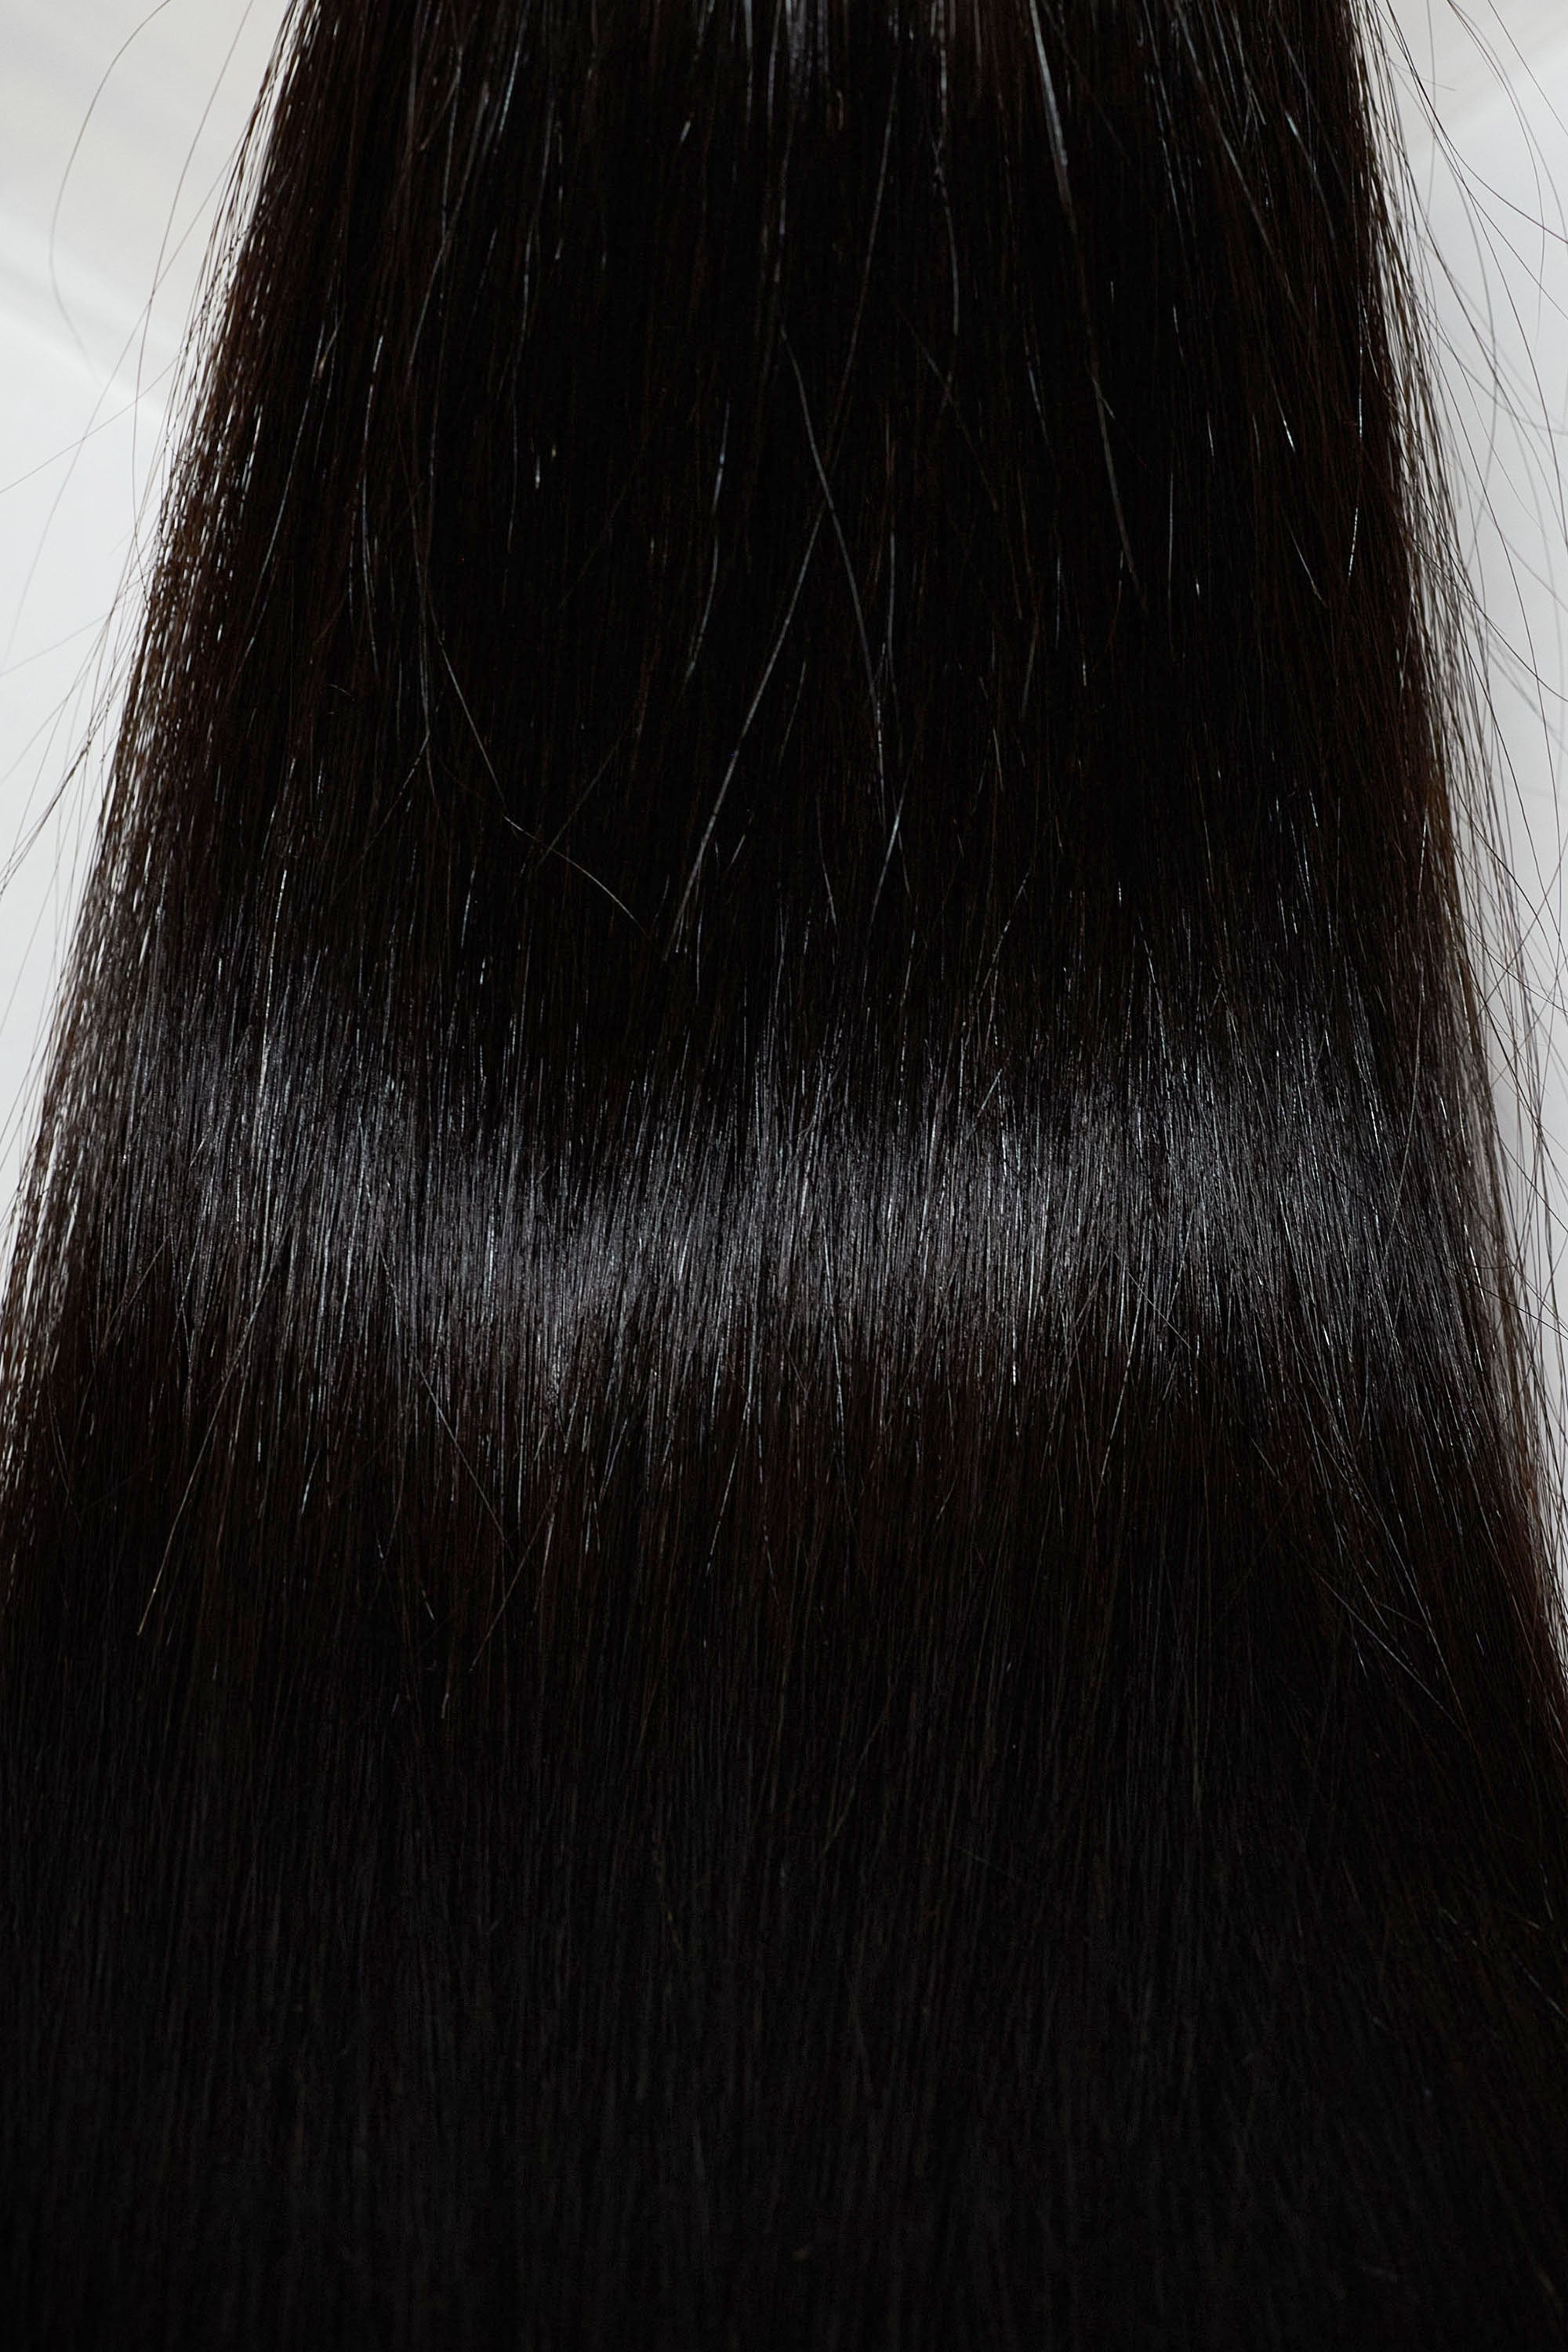 Behair professional Keratin Tip "Premium" 18" (45cm) Natural Straight Jet Black #1 - 25g (Micro - 0.5g each pcs) hair extensions